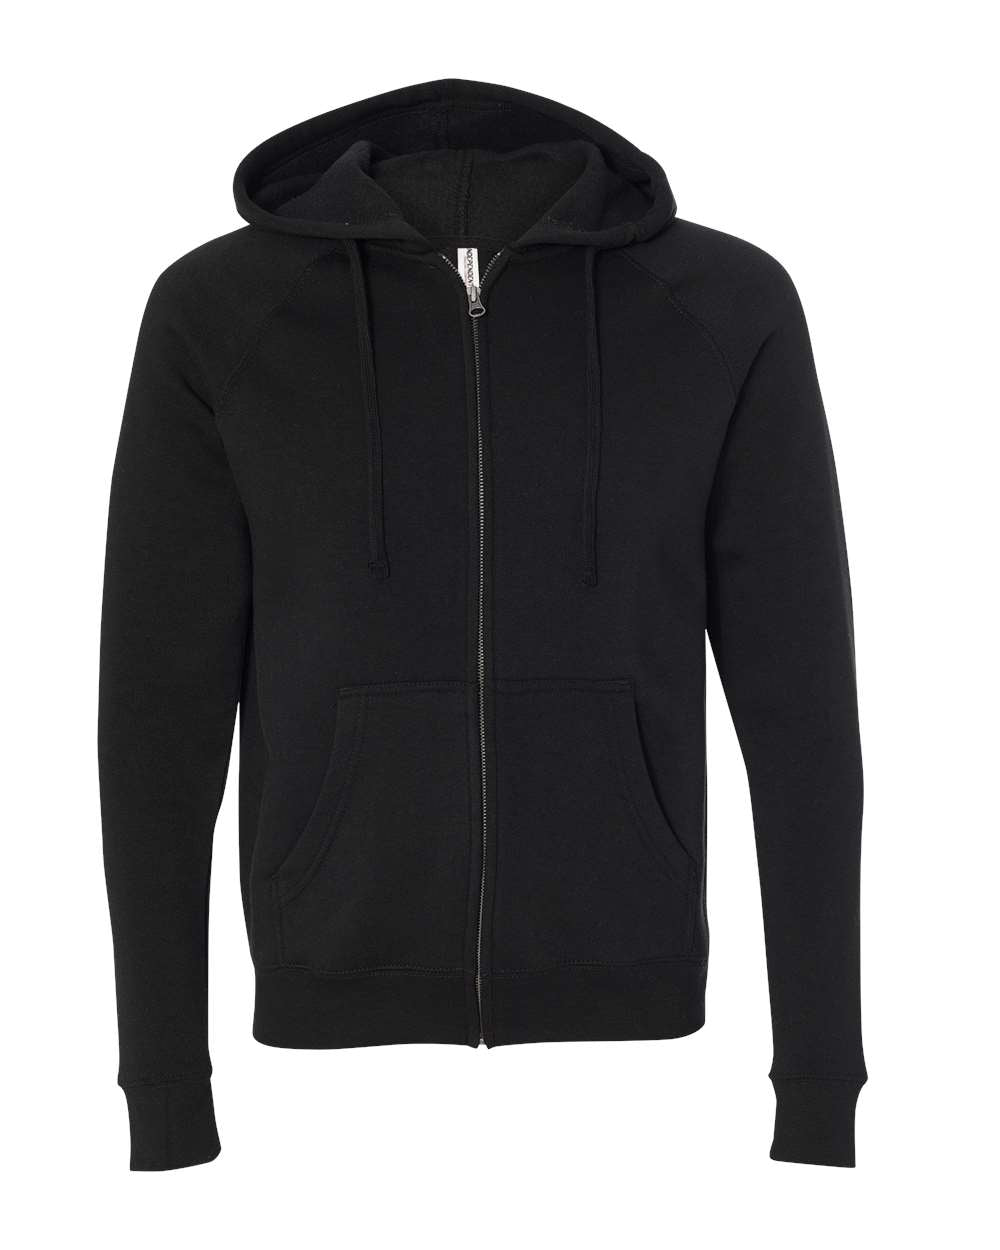 Independent Trading Co. - Special Blend Raglan Full-Zip Hooded Sweatshirt